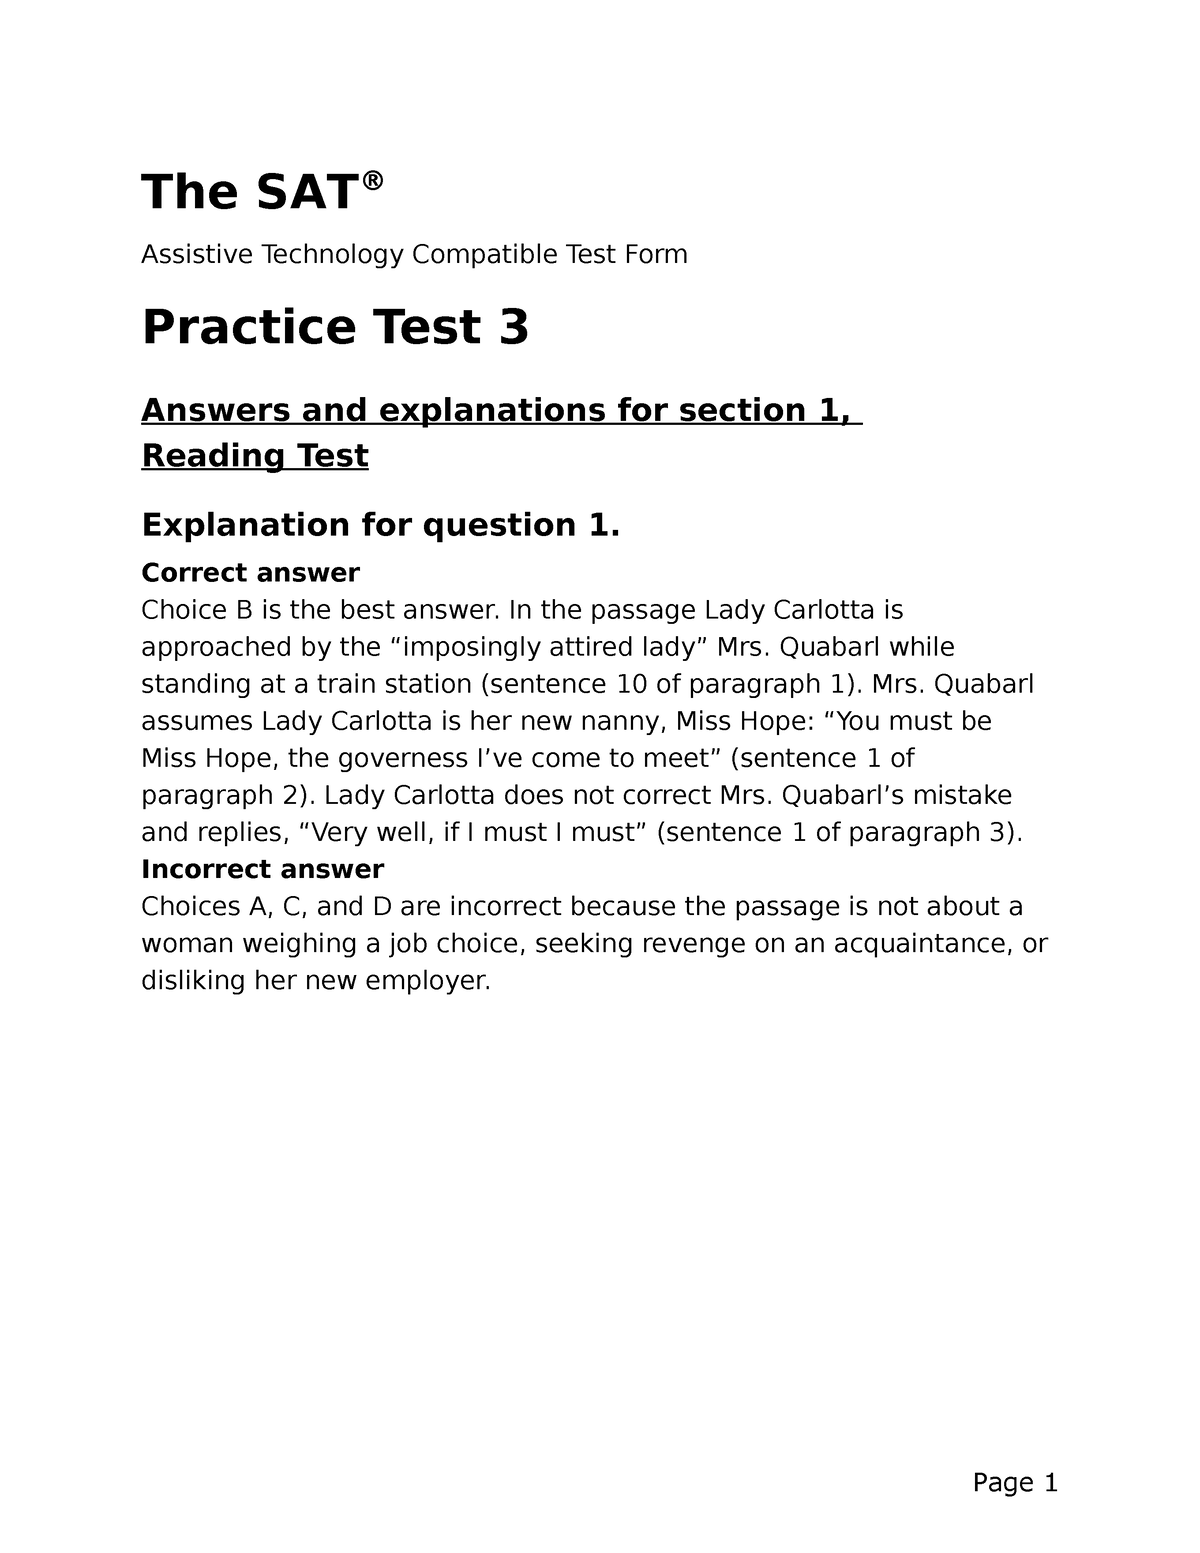 sat practice test 3 essay answers